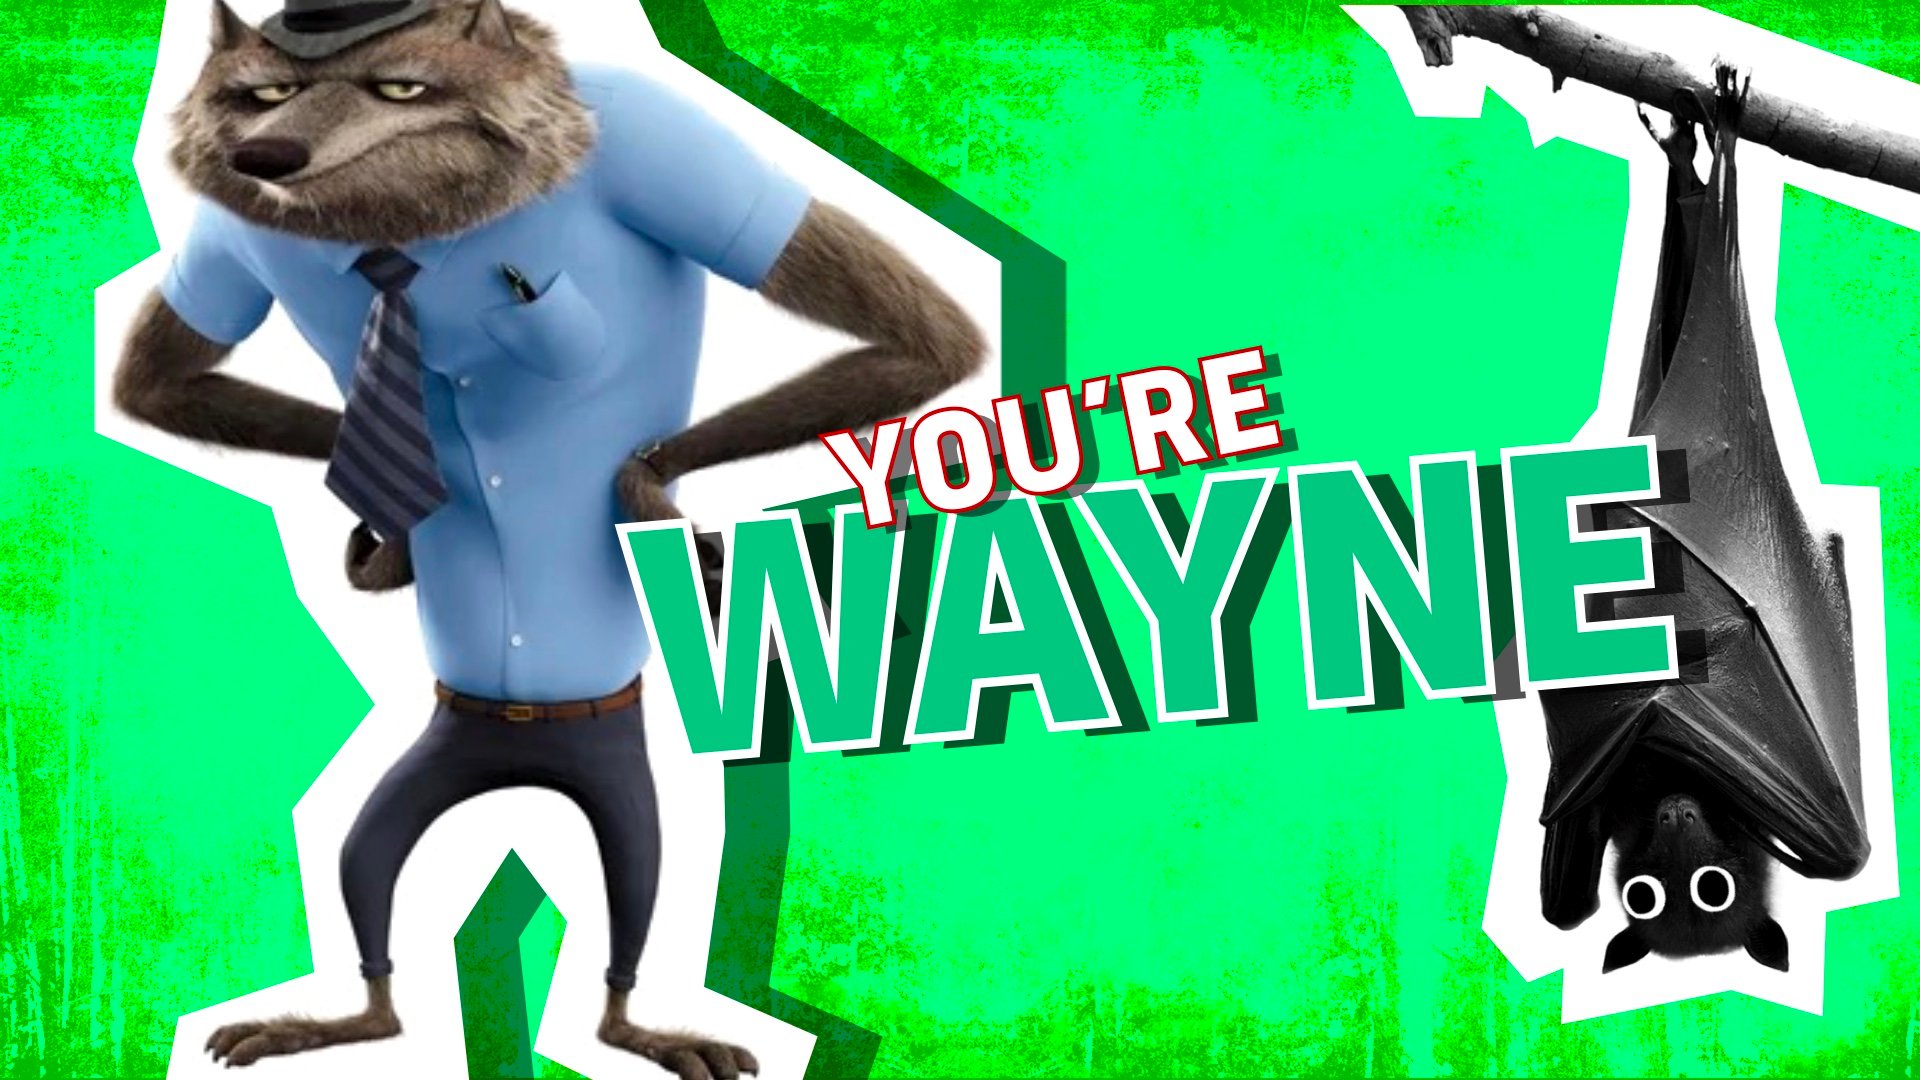 Result: Wayne